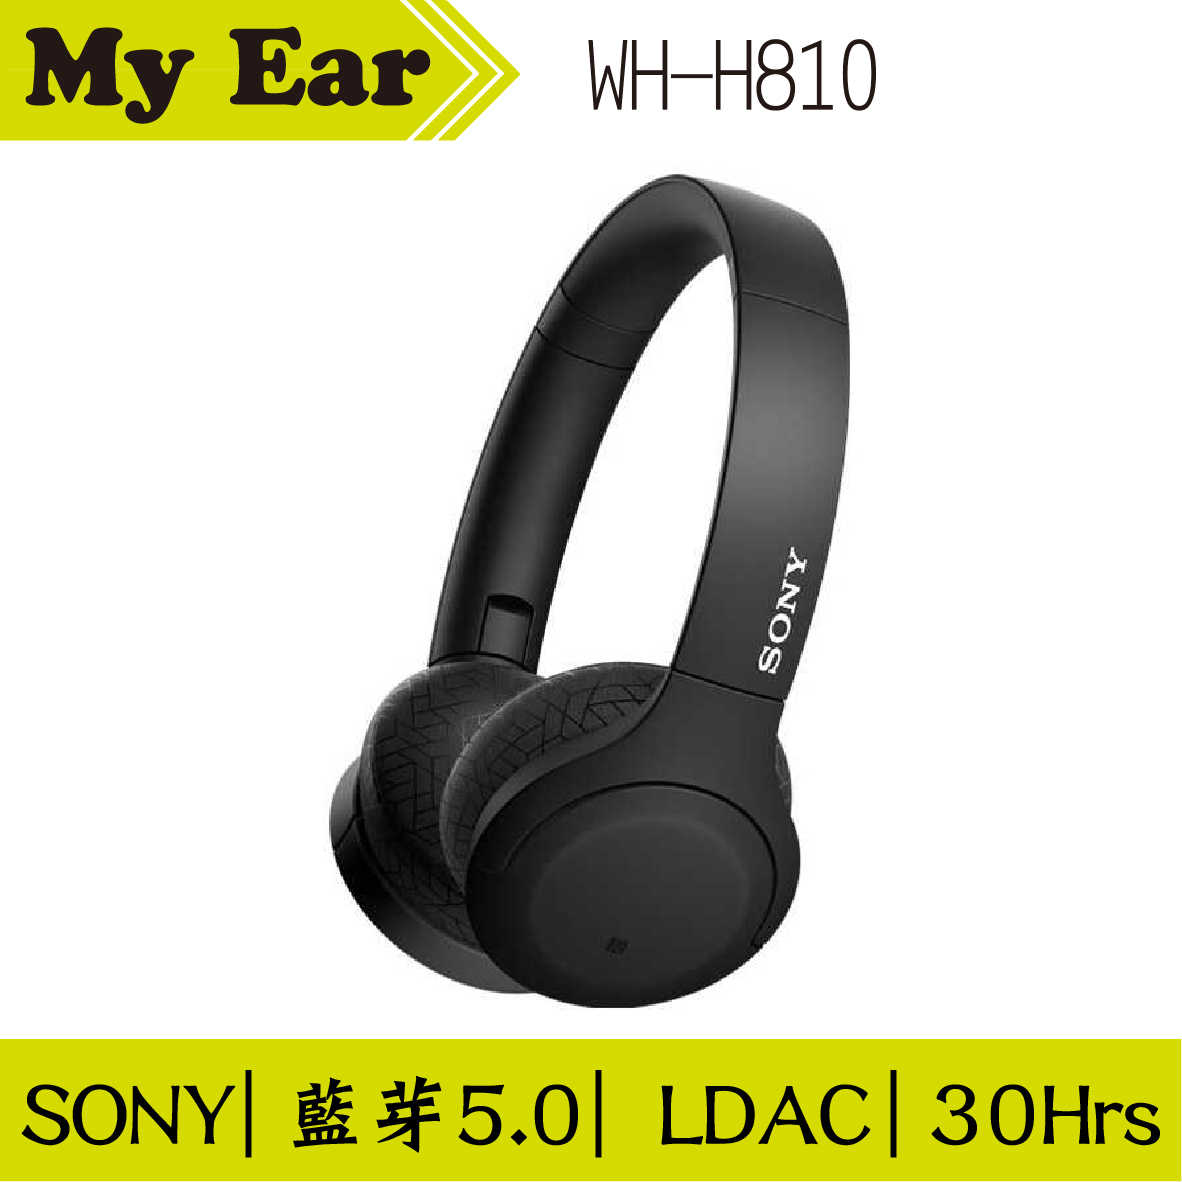 SONY WH-H810 h.ear 藍芽 耳罩式 耳機 黑色 | My Ear 耳機專門店